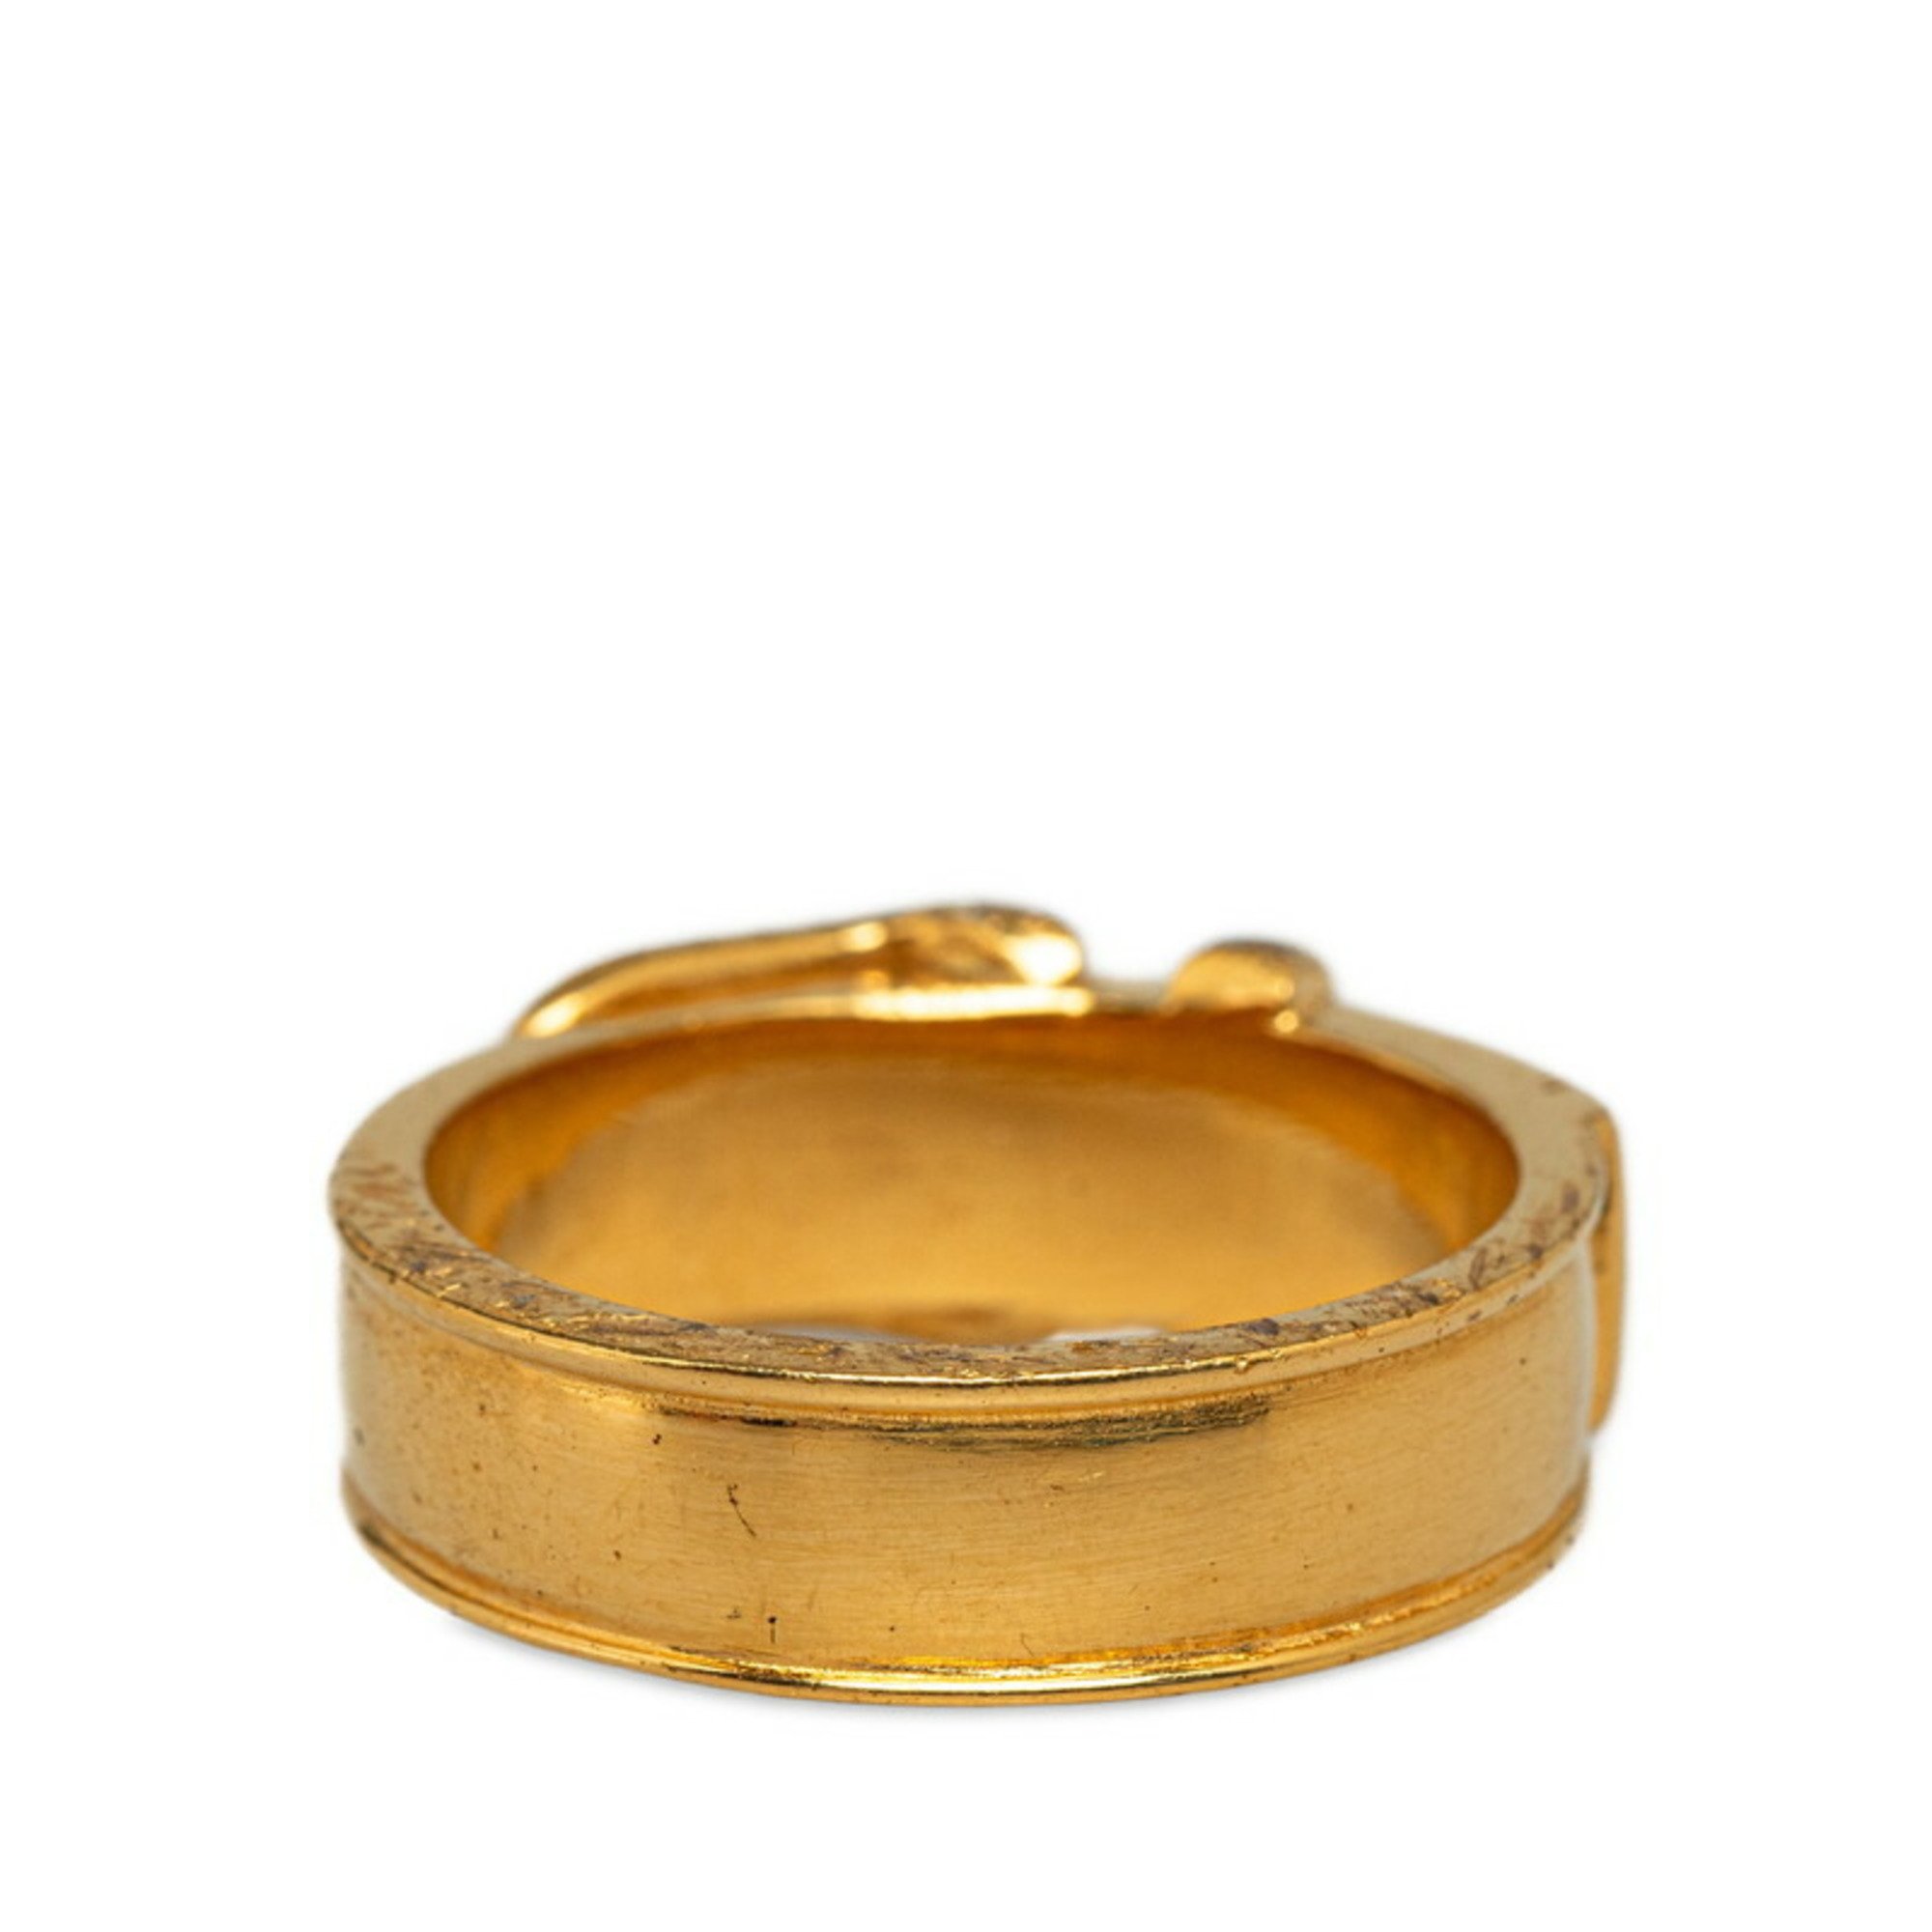 Hermes Belt Motif Scarf Ring Gold Plated Women's HERMES